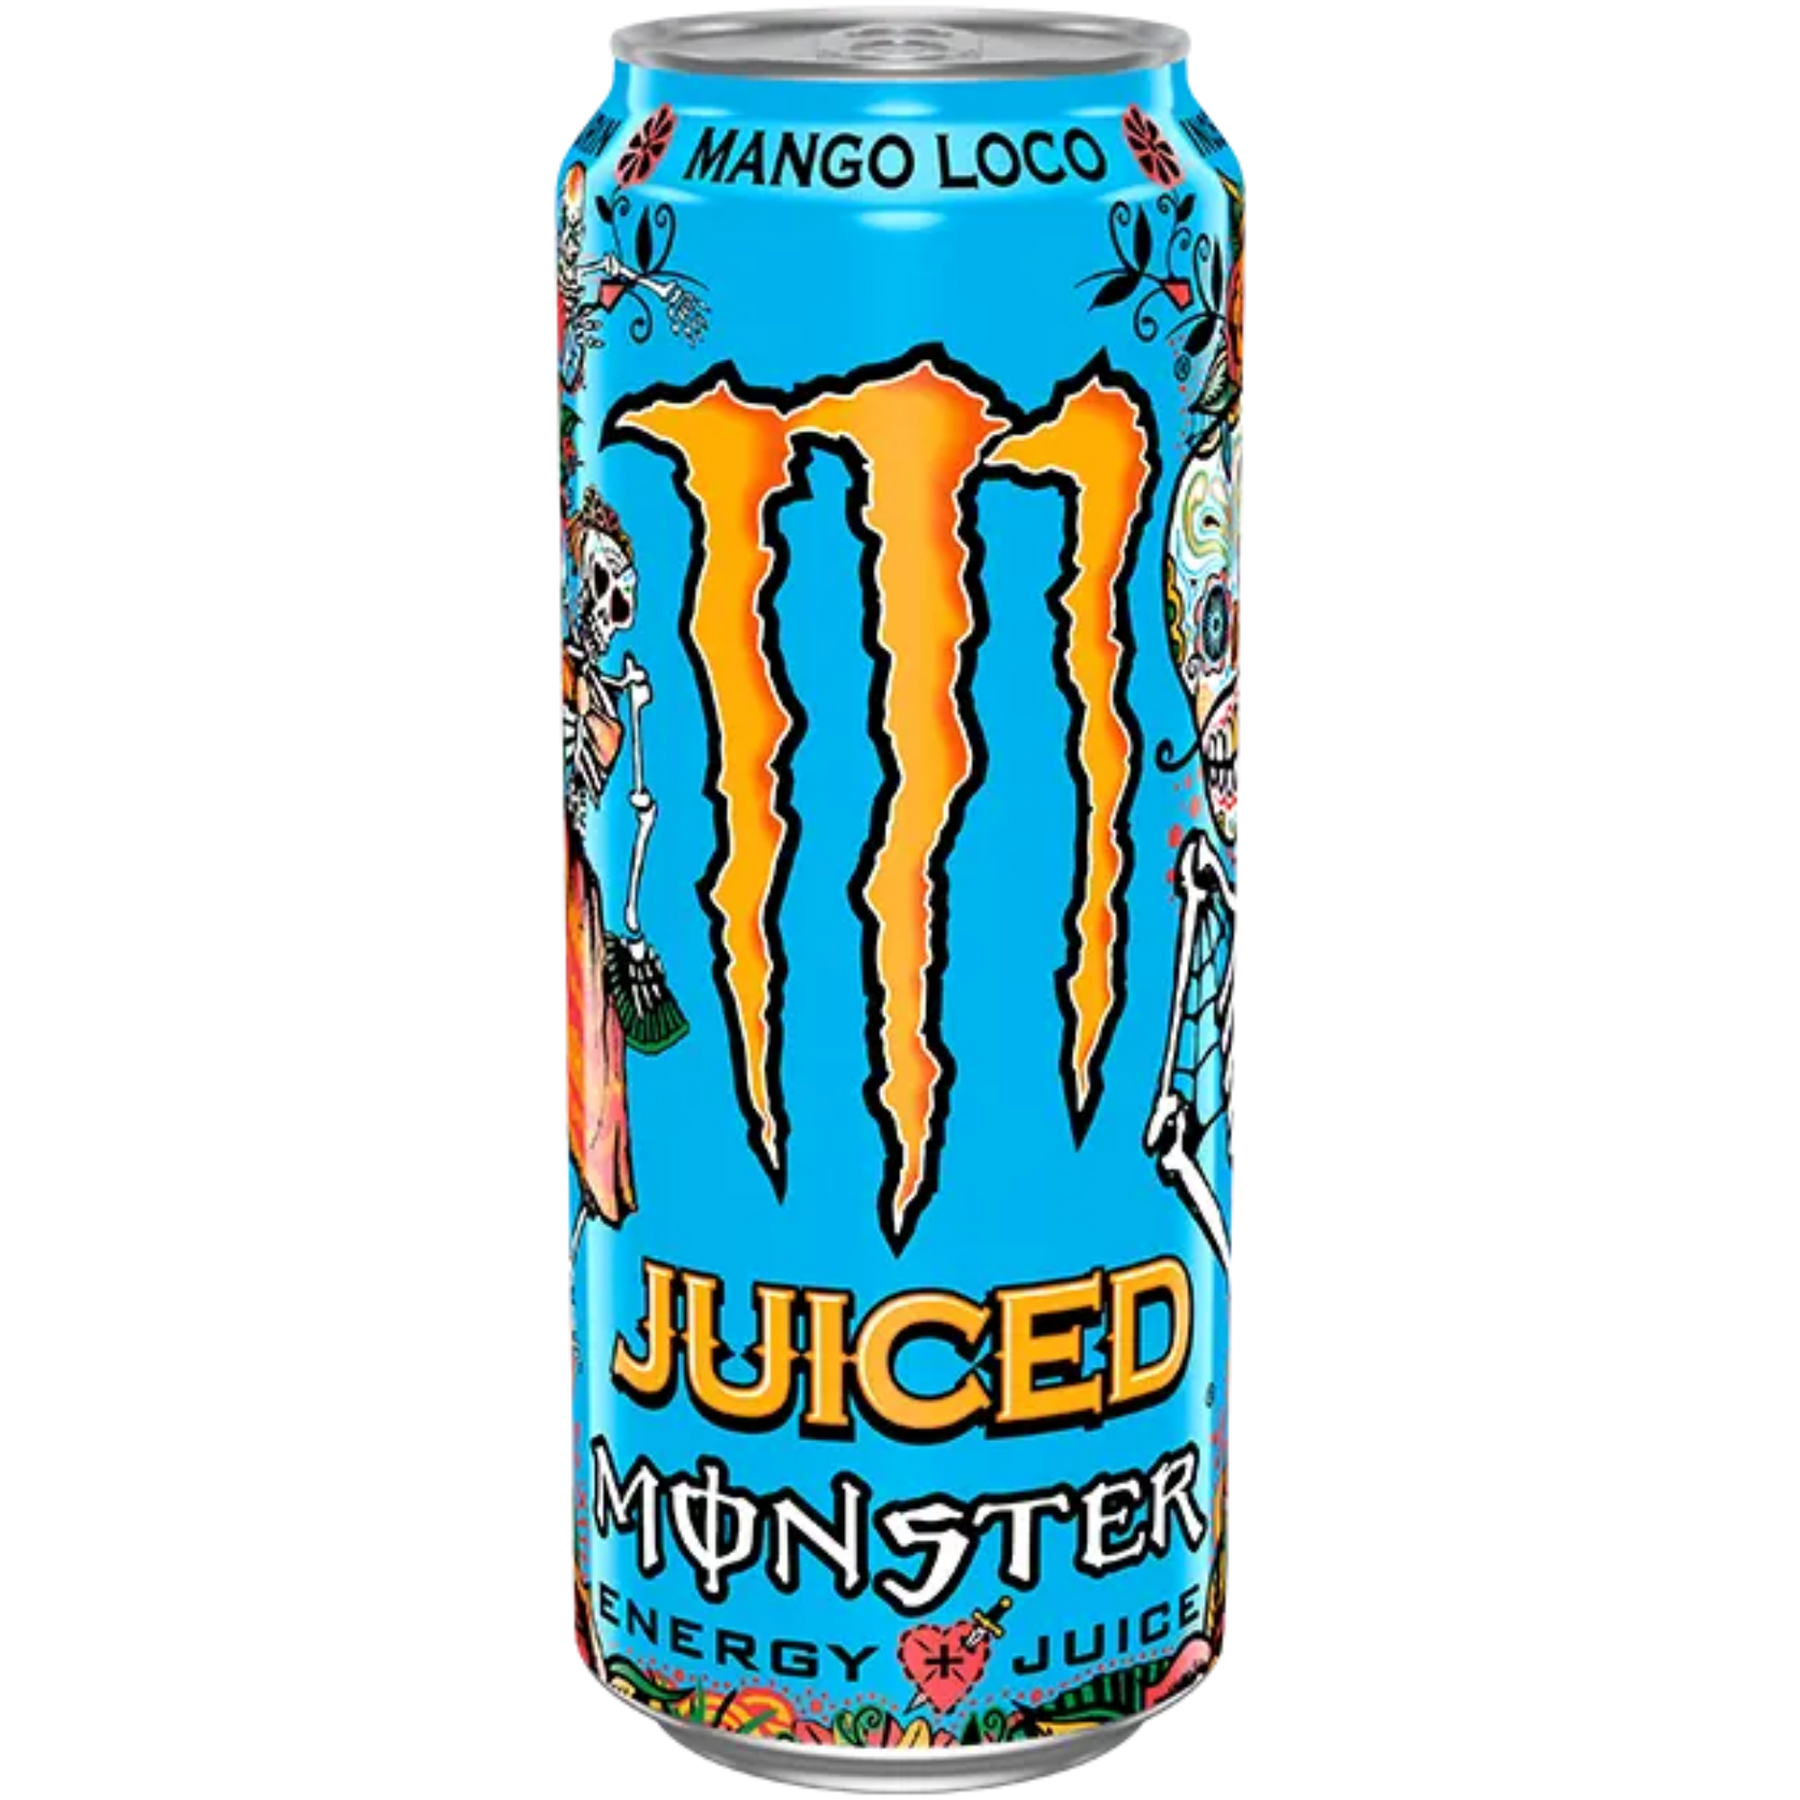 Monster Mango Loco Energy Drink 500ml